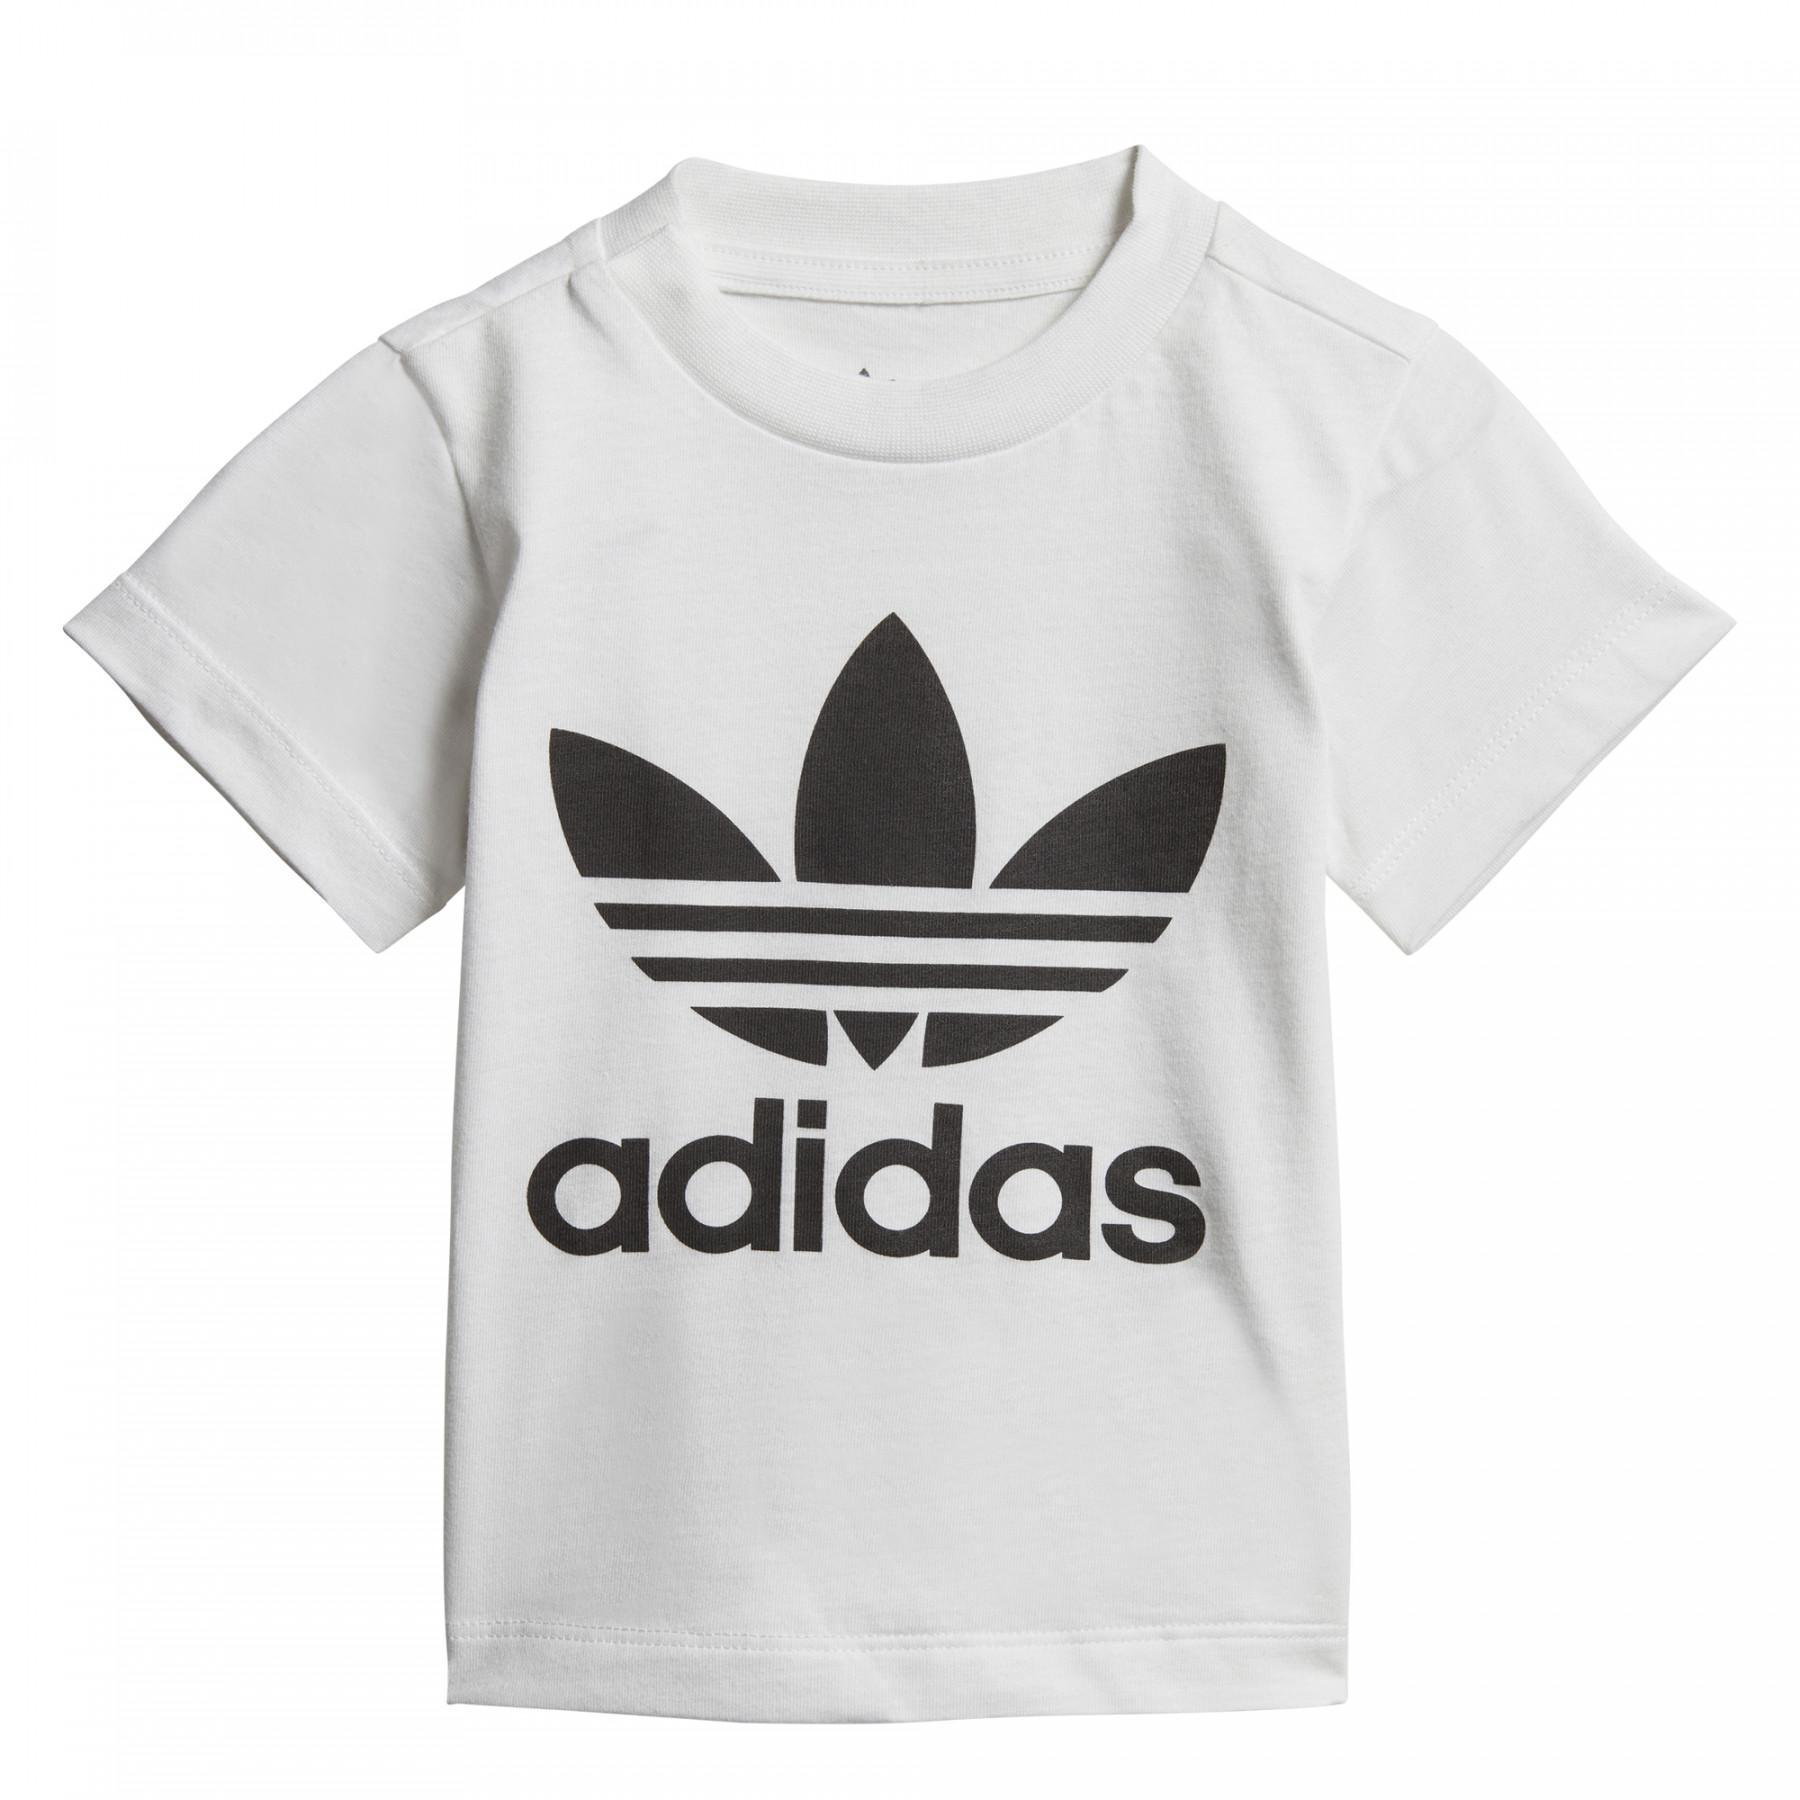 T-shirt baby adidas Trefoil